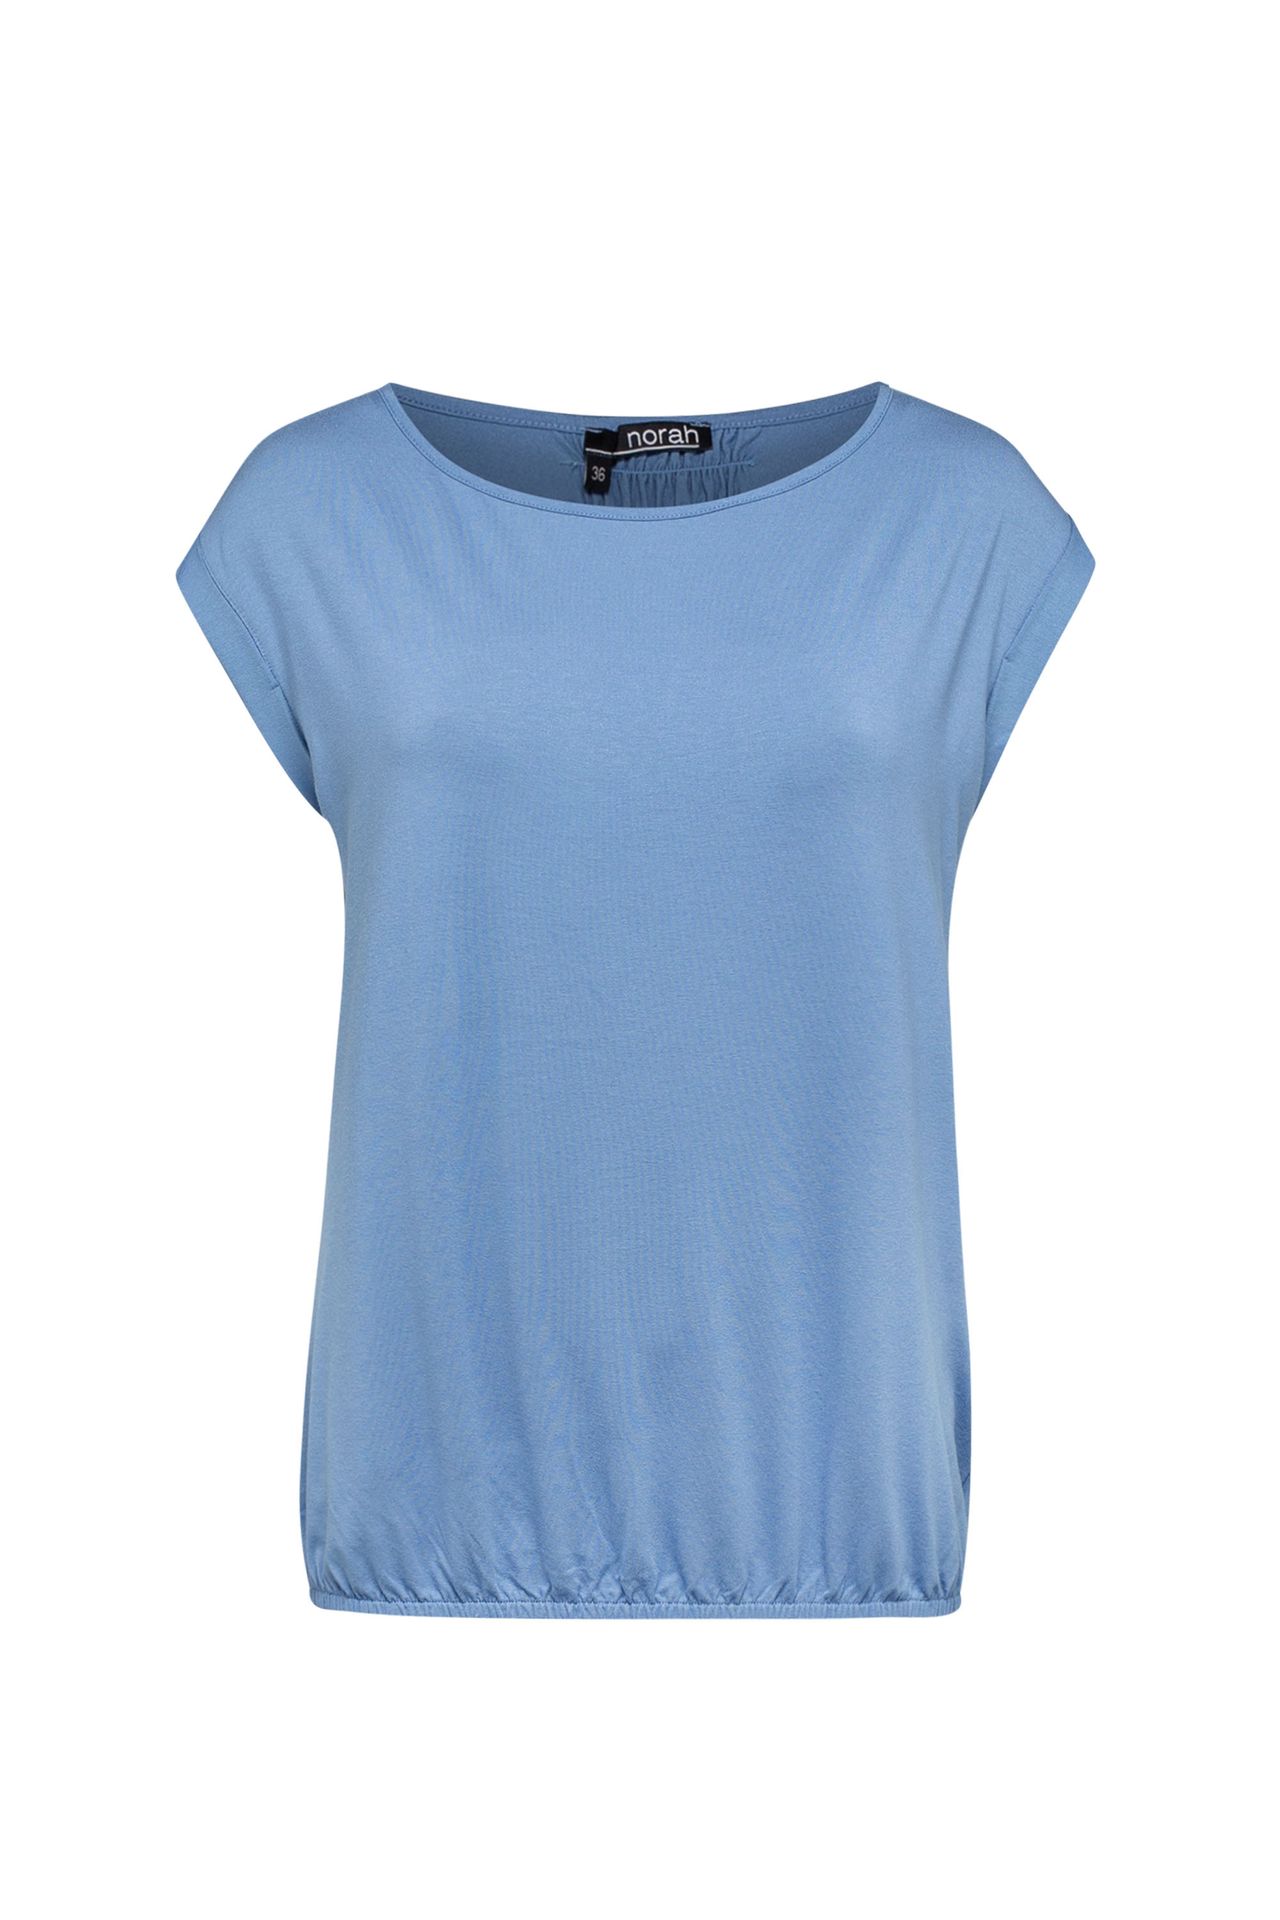 Norah Shirt Marije blauw denim blue 203656-472